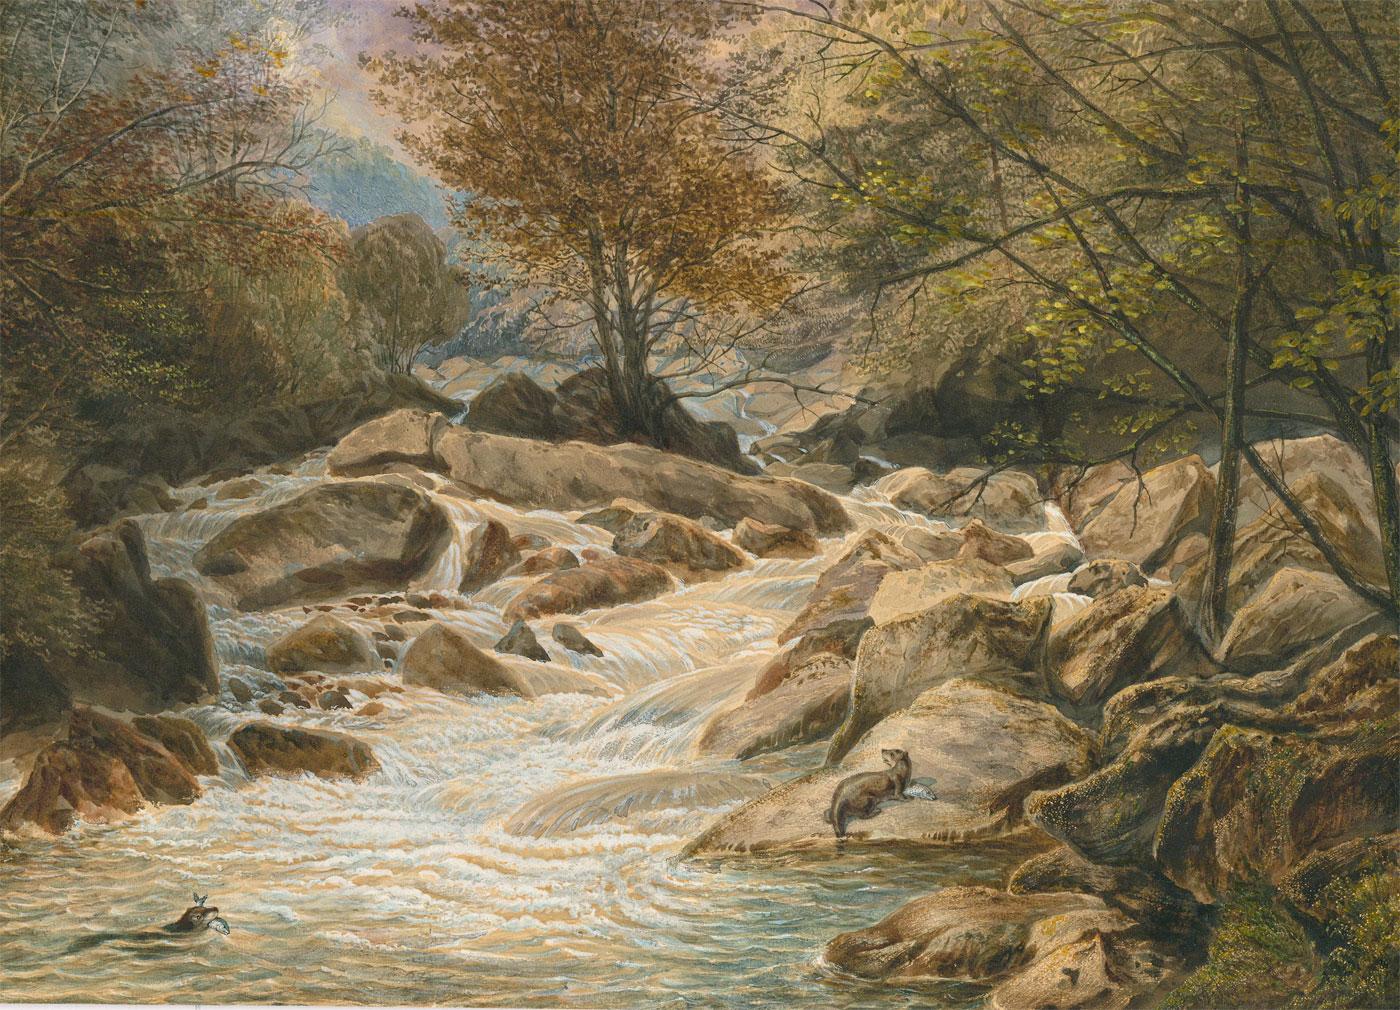 Unknown Landscape Art - William Dickes  (1815-1892) - Late 19th Century Watercolour, The Otter's Catch